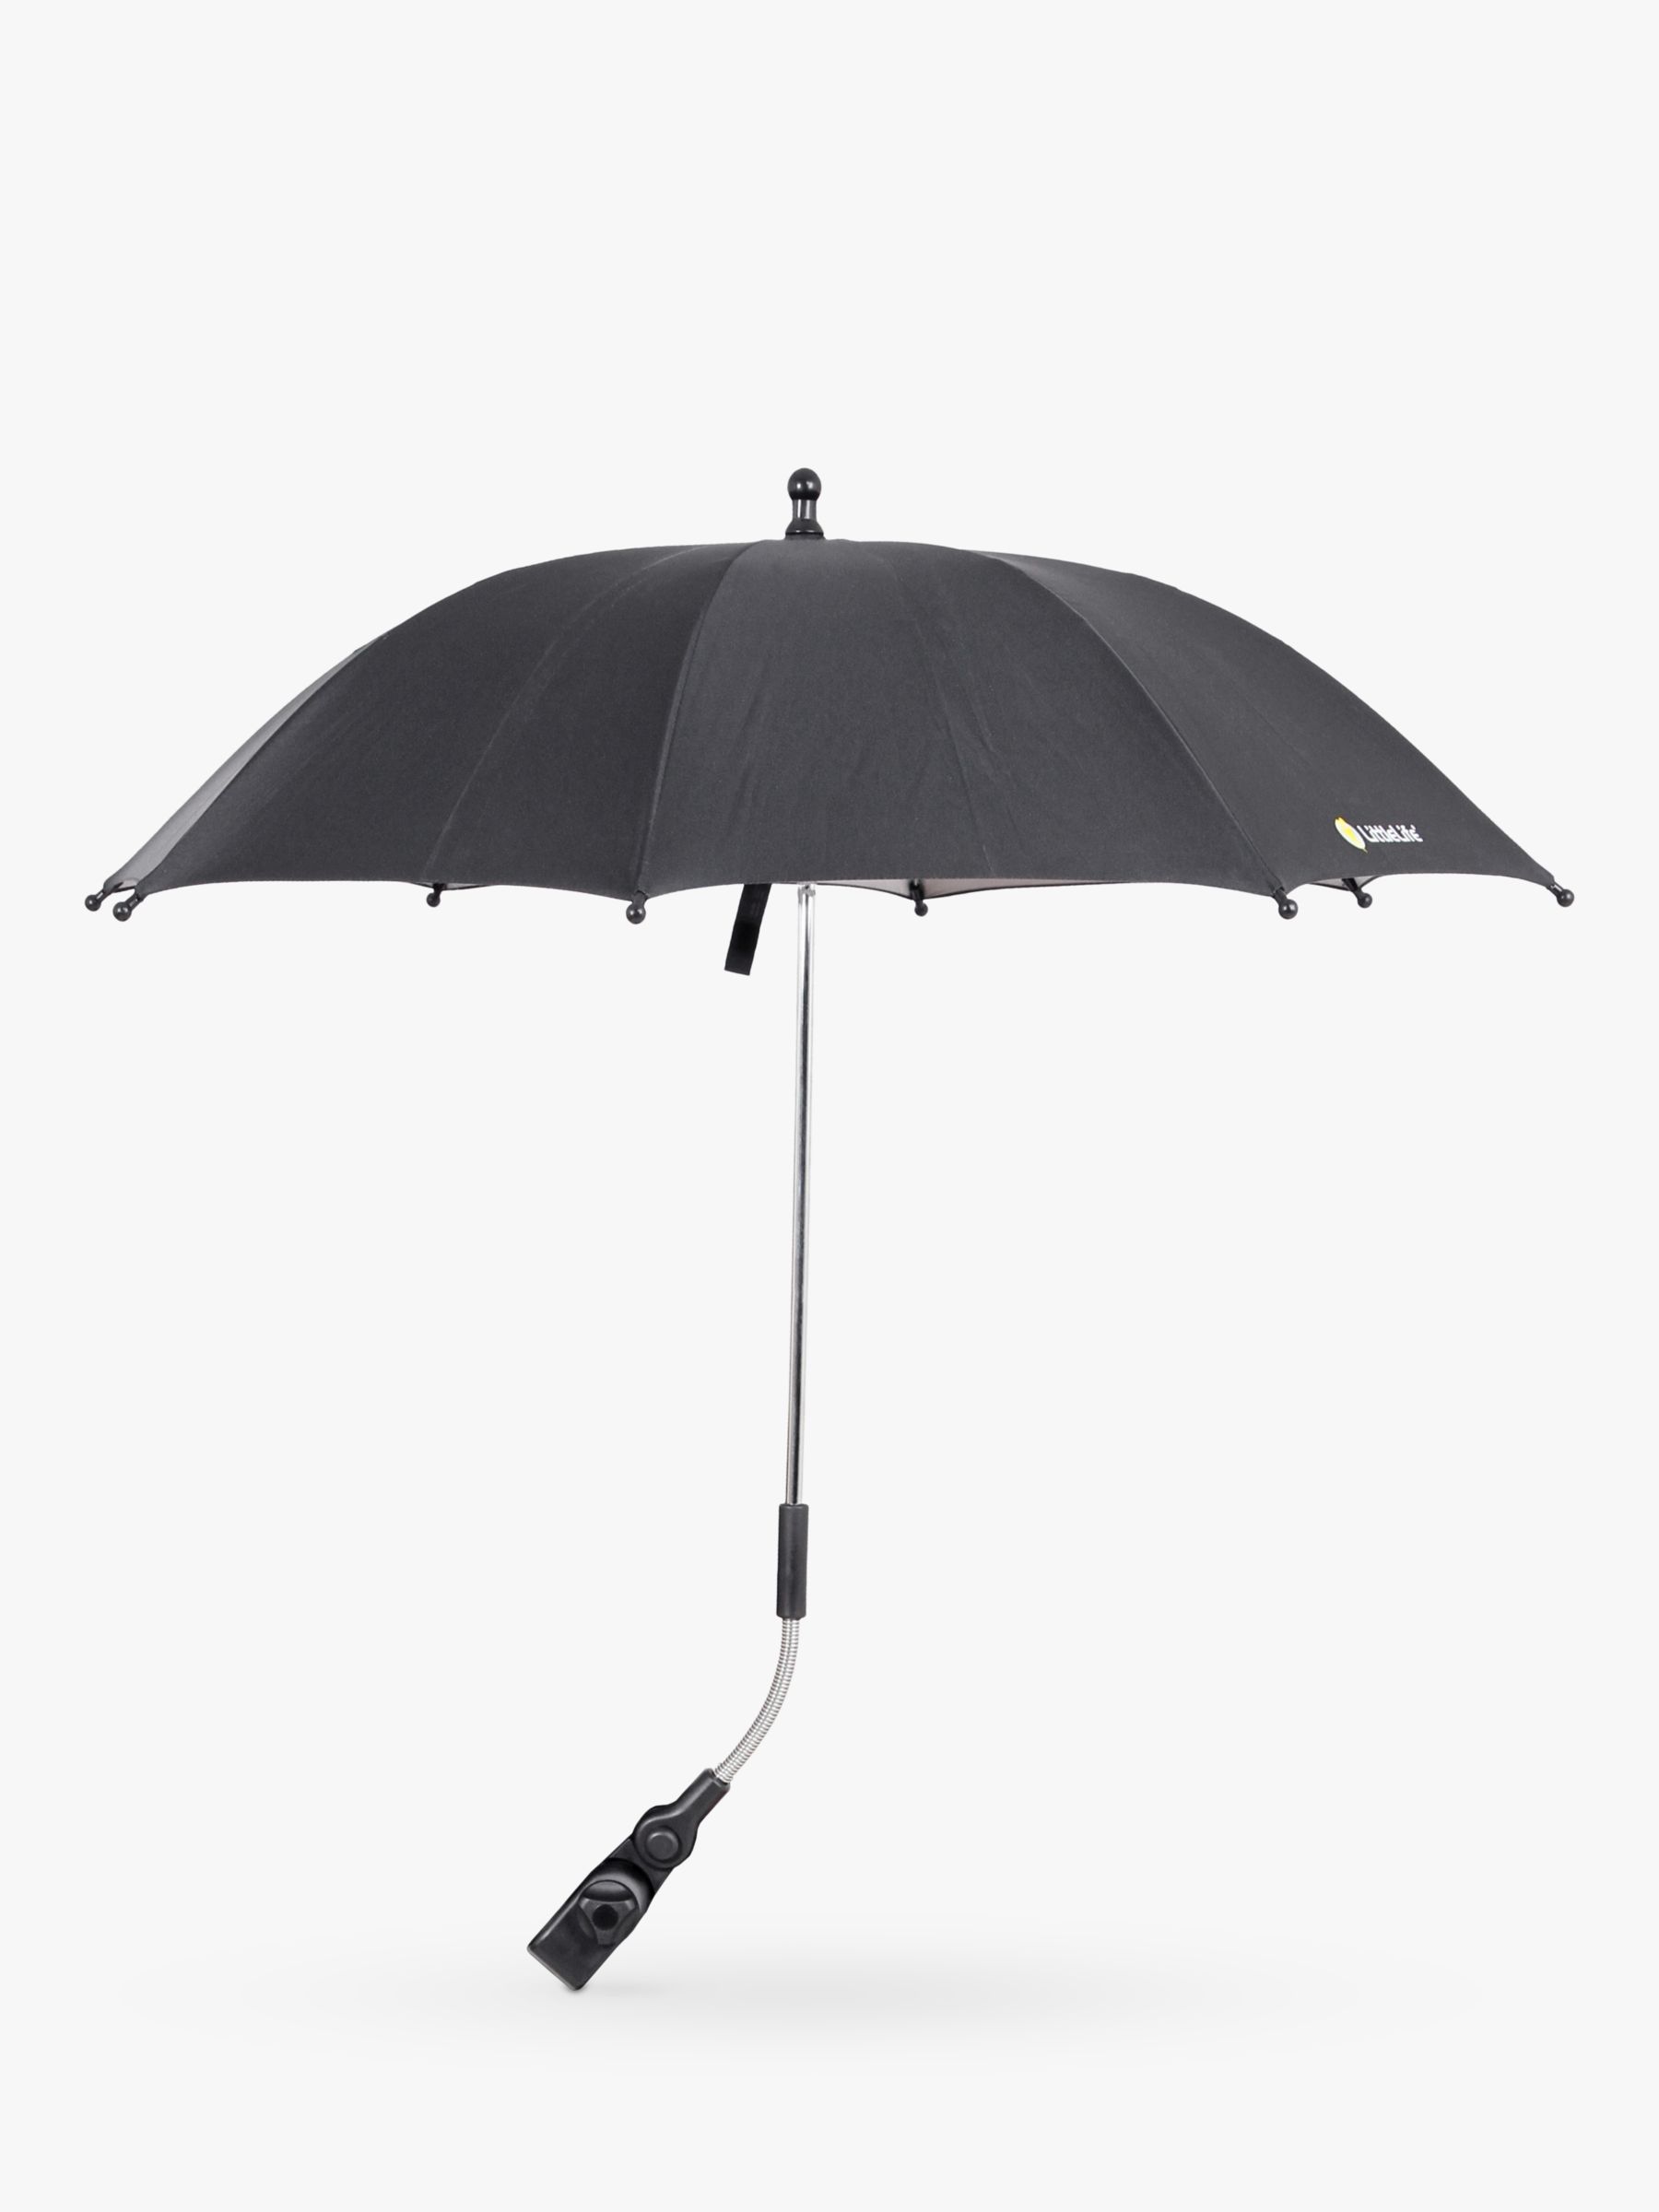 universal umbrella for pushchair